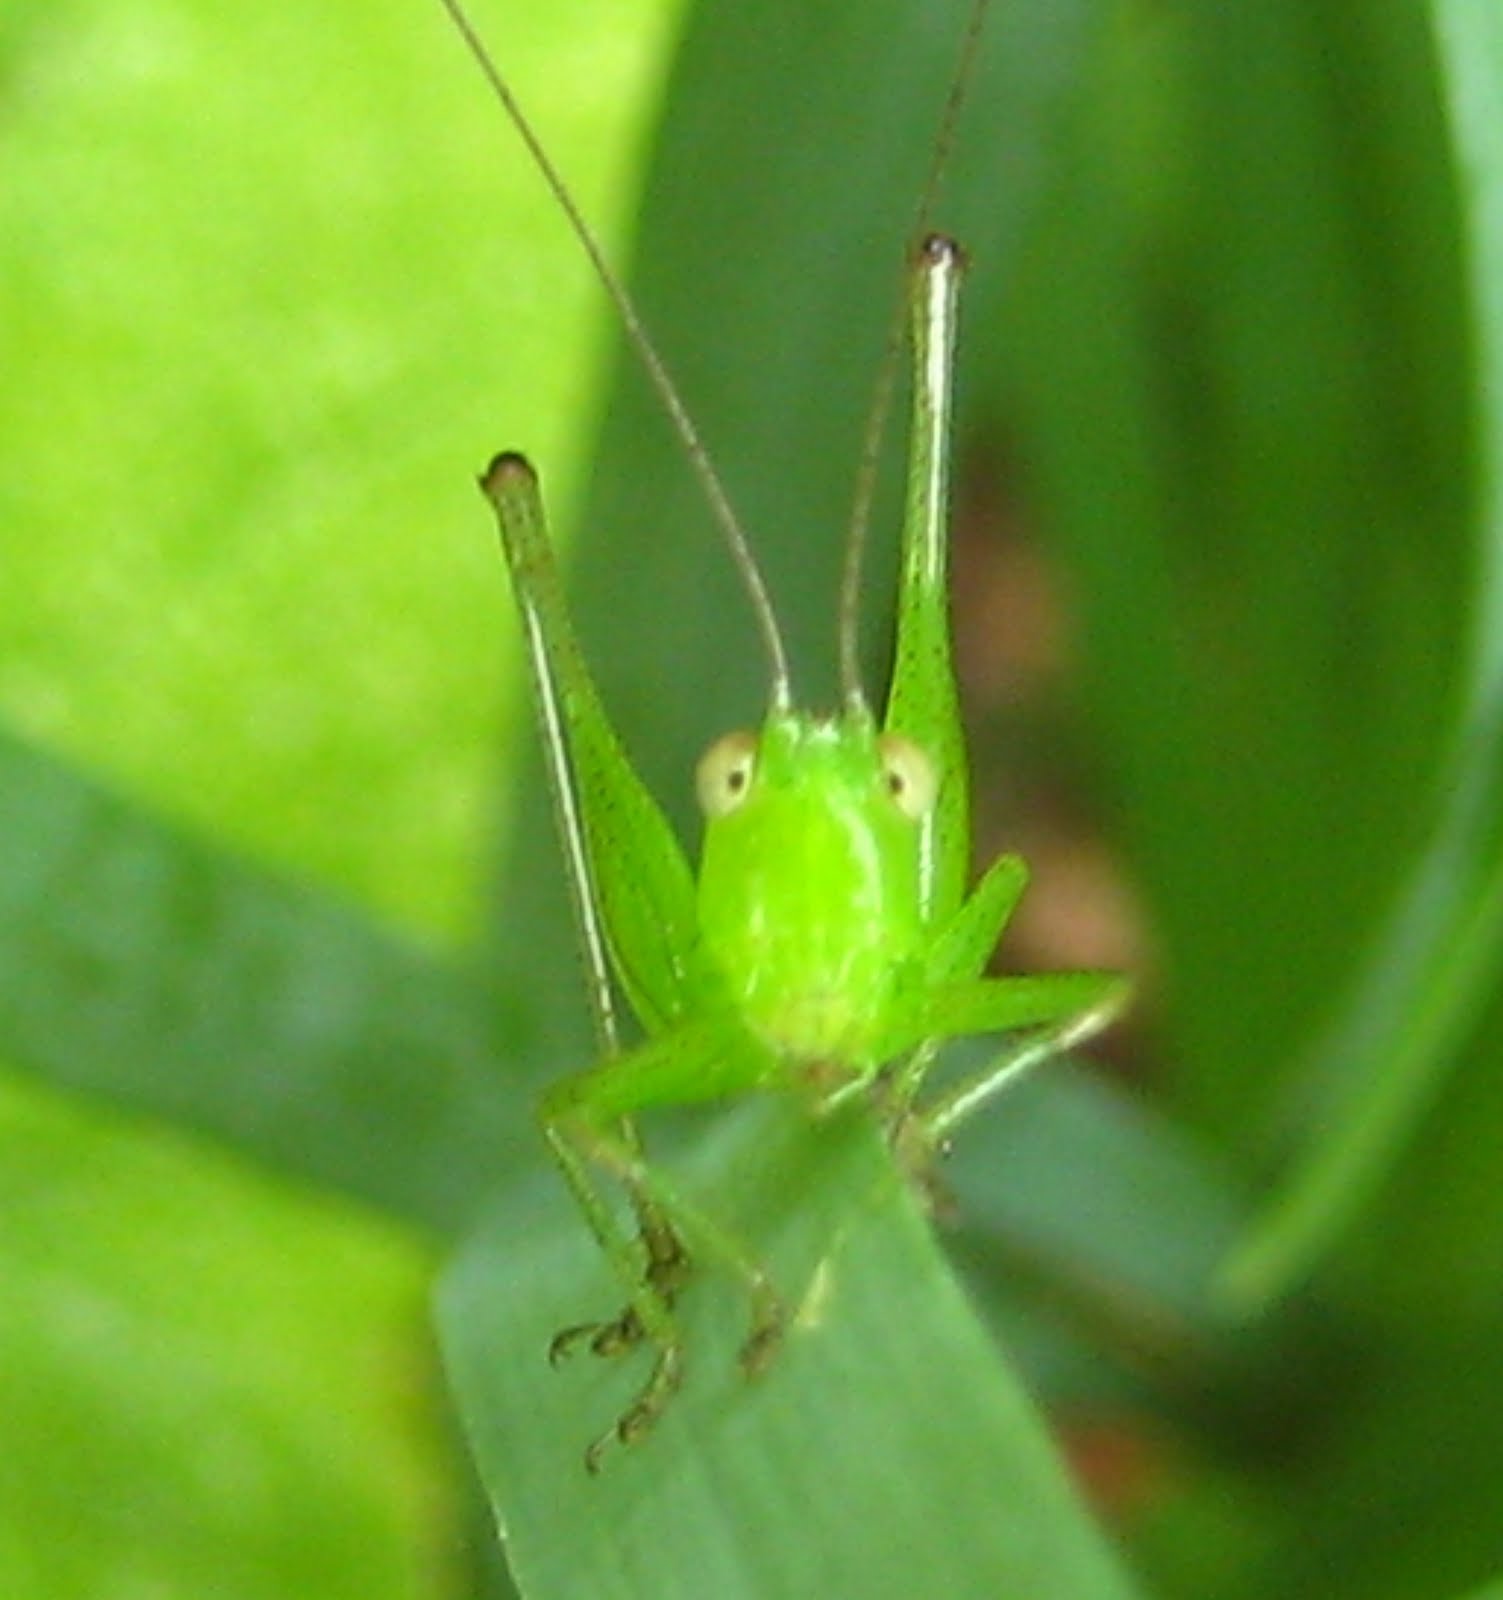 Bugs R Cool: Baby Grasshopper